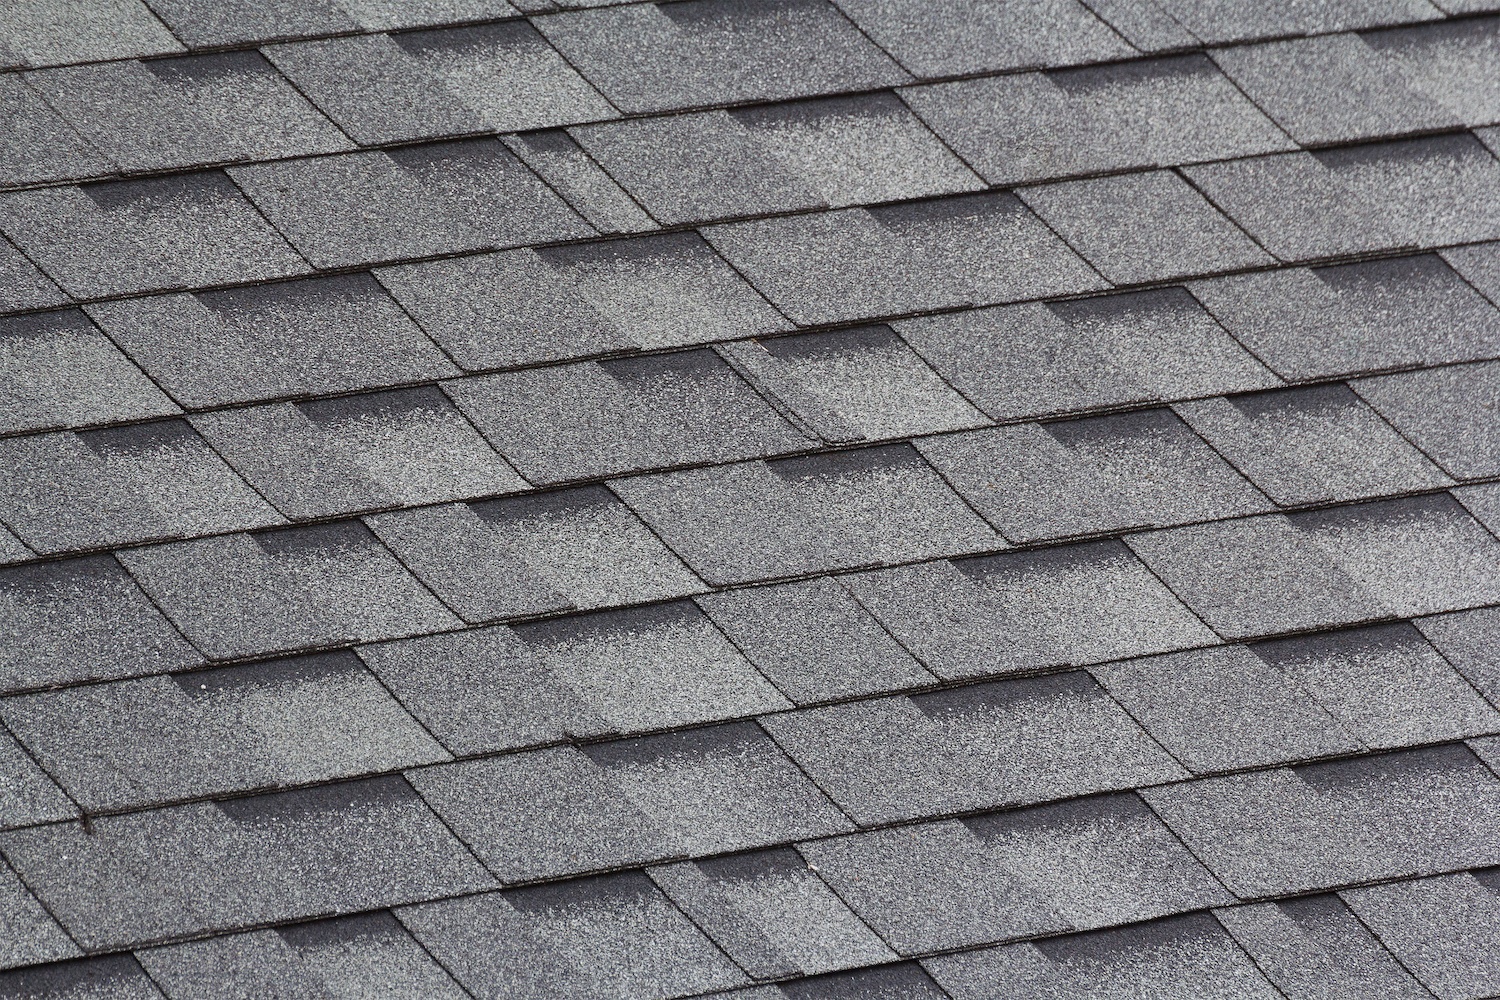 brunswick county roofing shingles